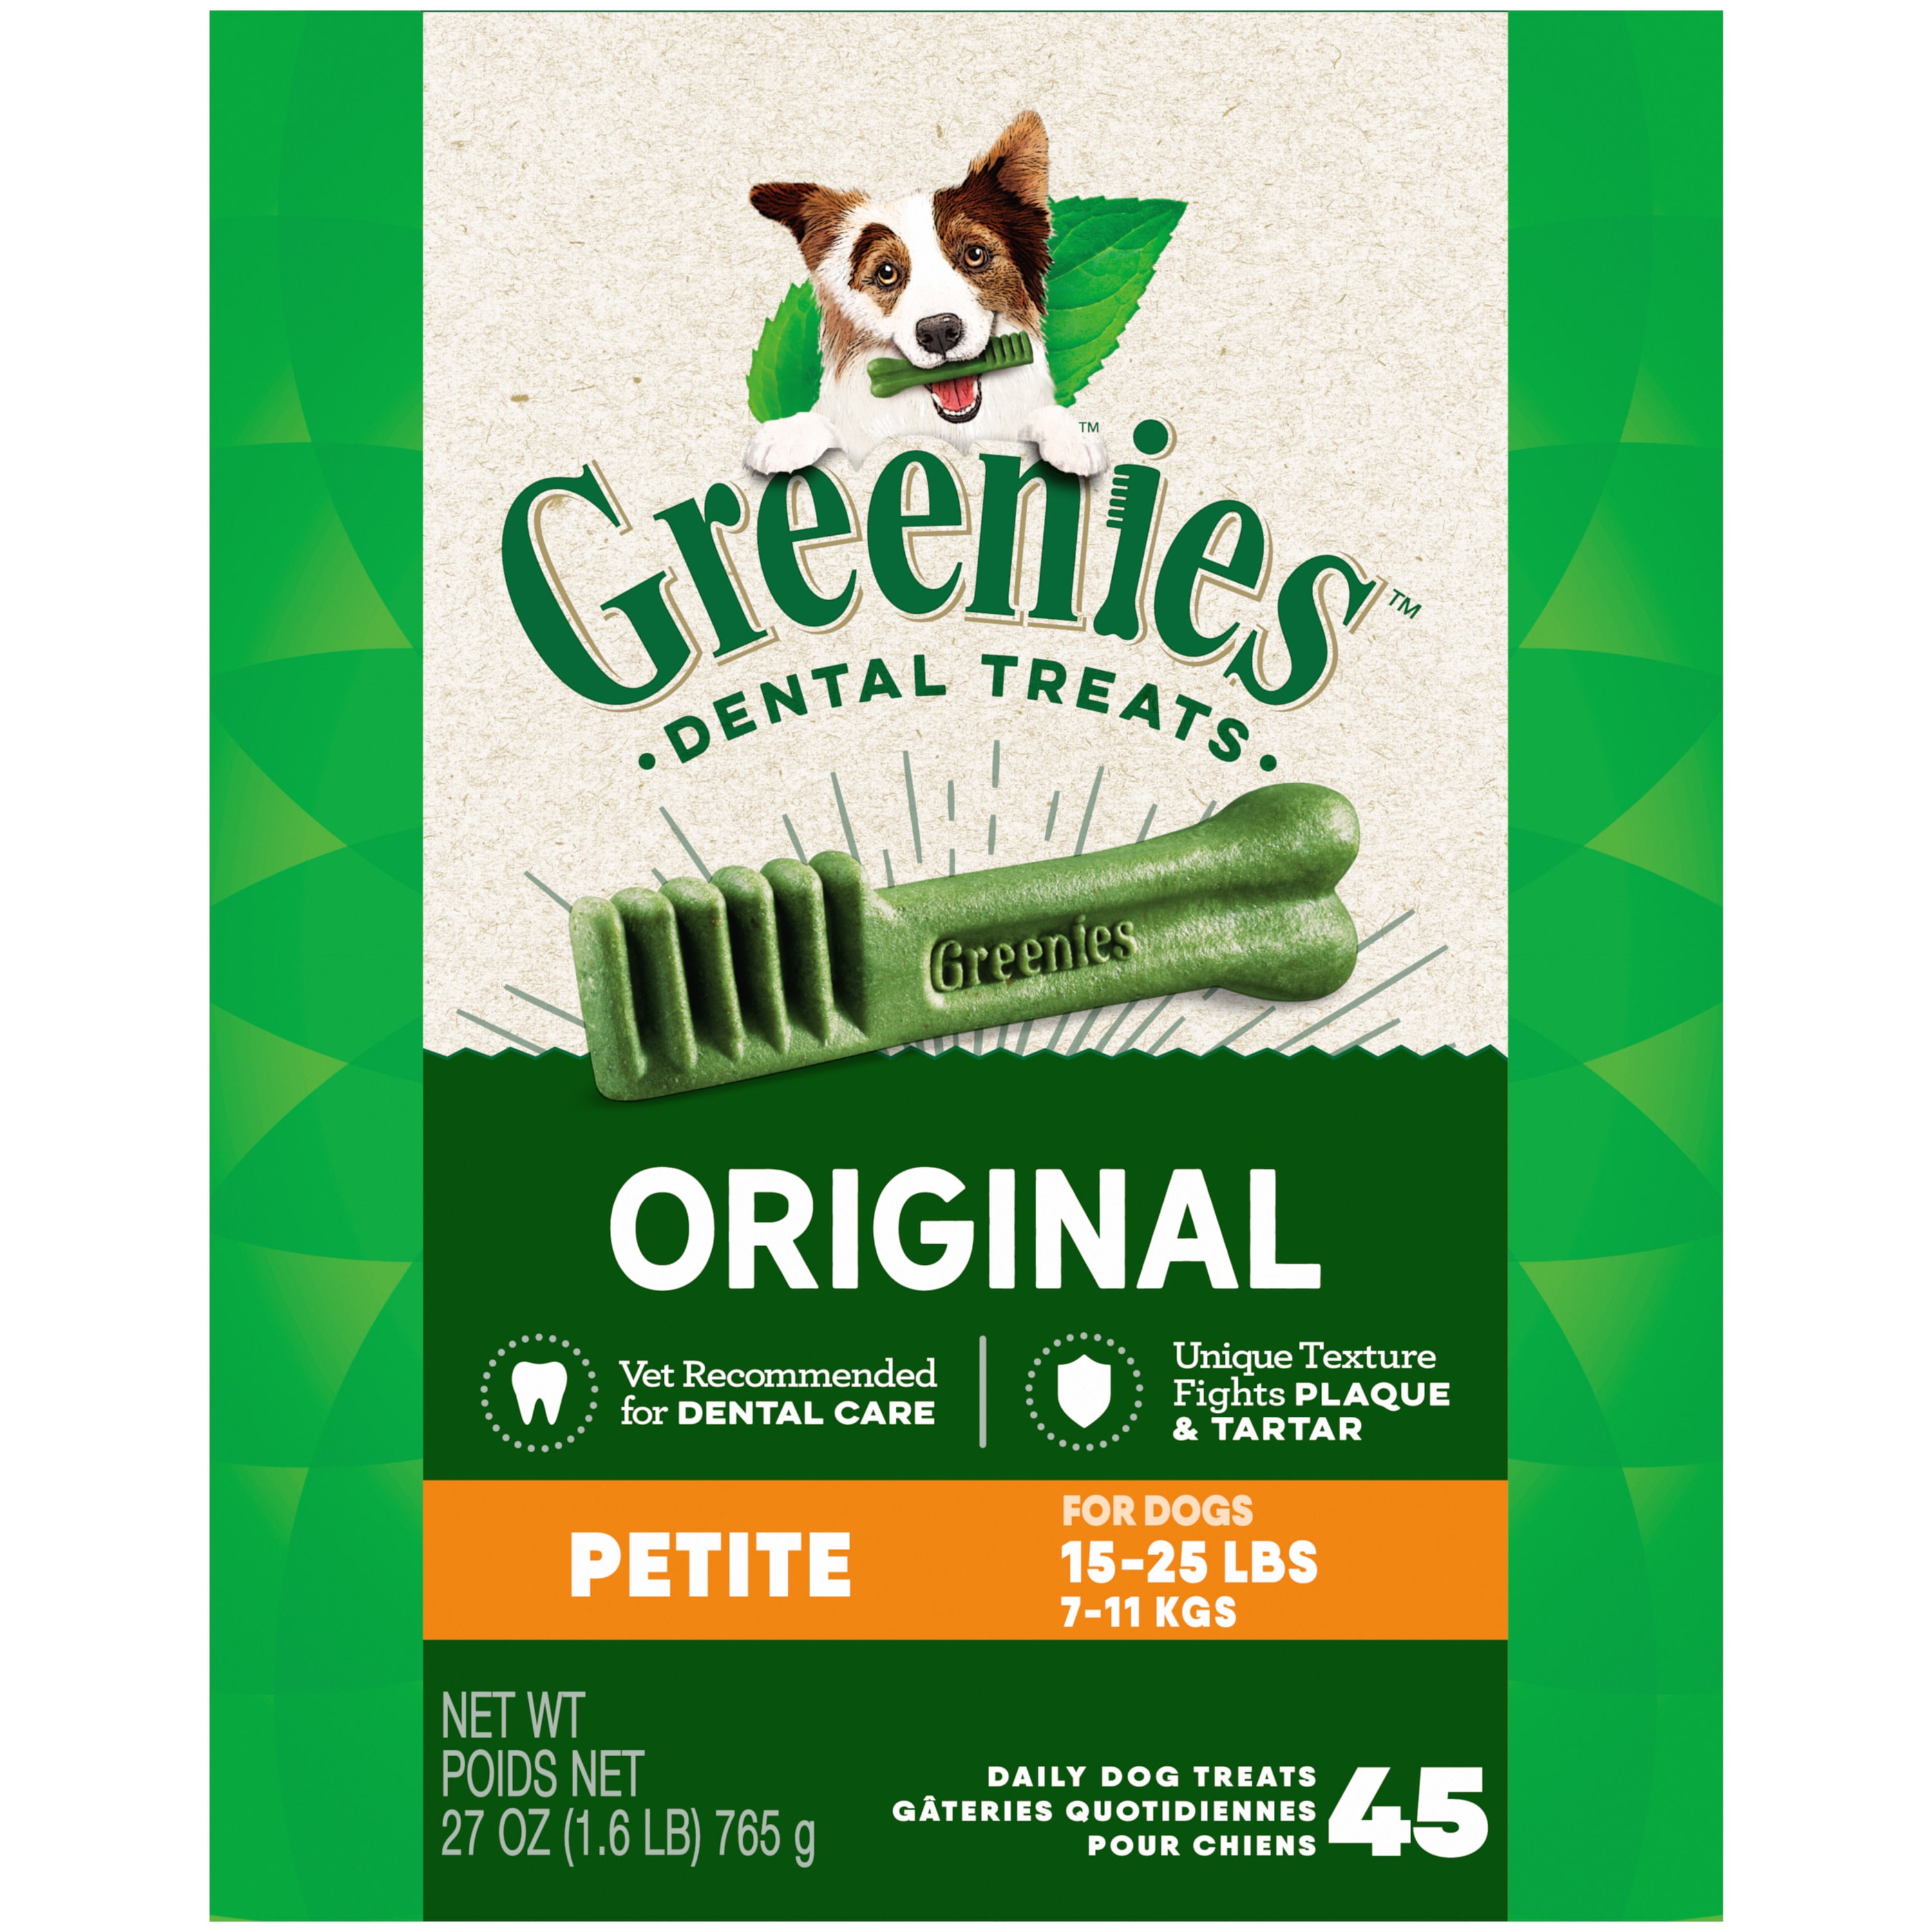 GREENIES Original Flavor Petite Dental Chew Treats for Dogs, 27 oz. Box (45 Treats)